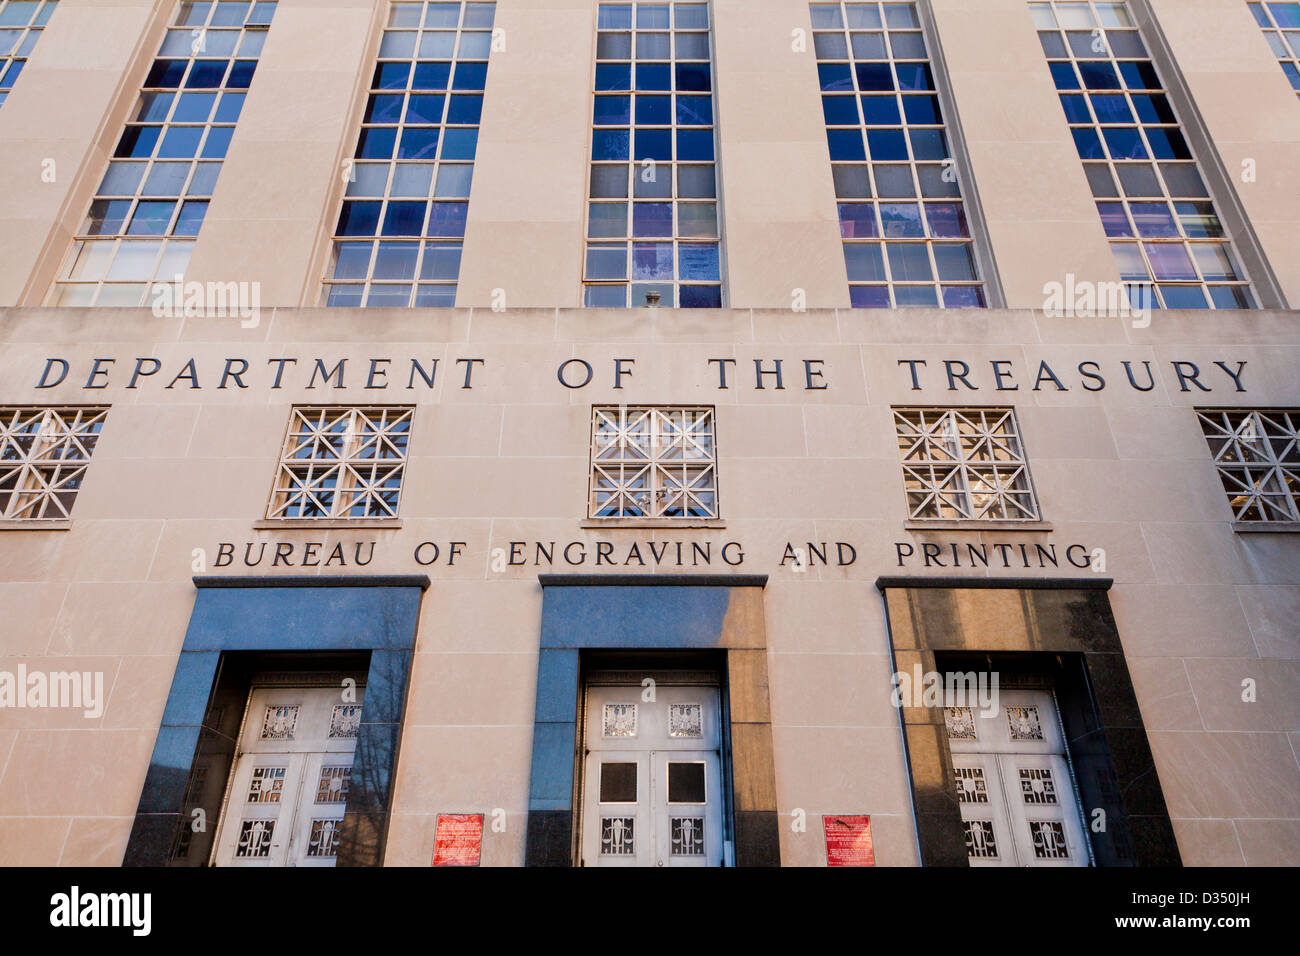 Oficina de Grabado e Impresión - Departamento de edificio del tesoro, Washington, D.C. Foto de stock